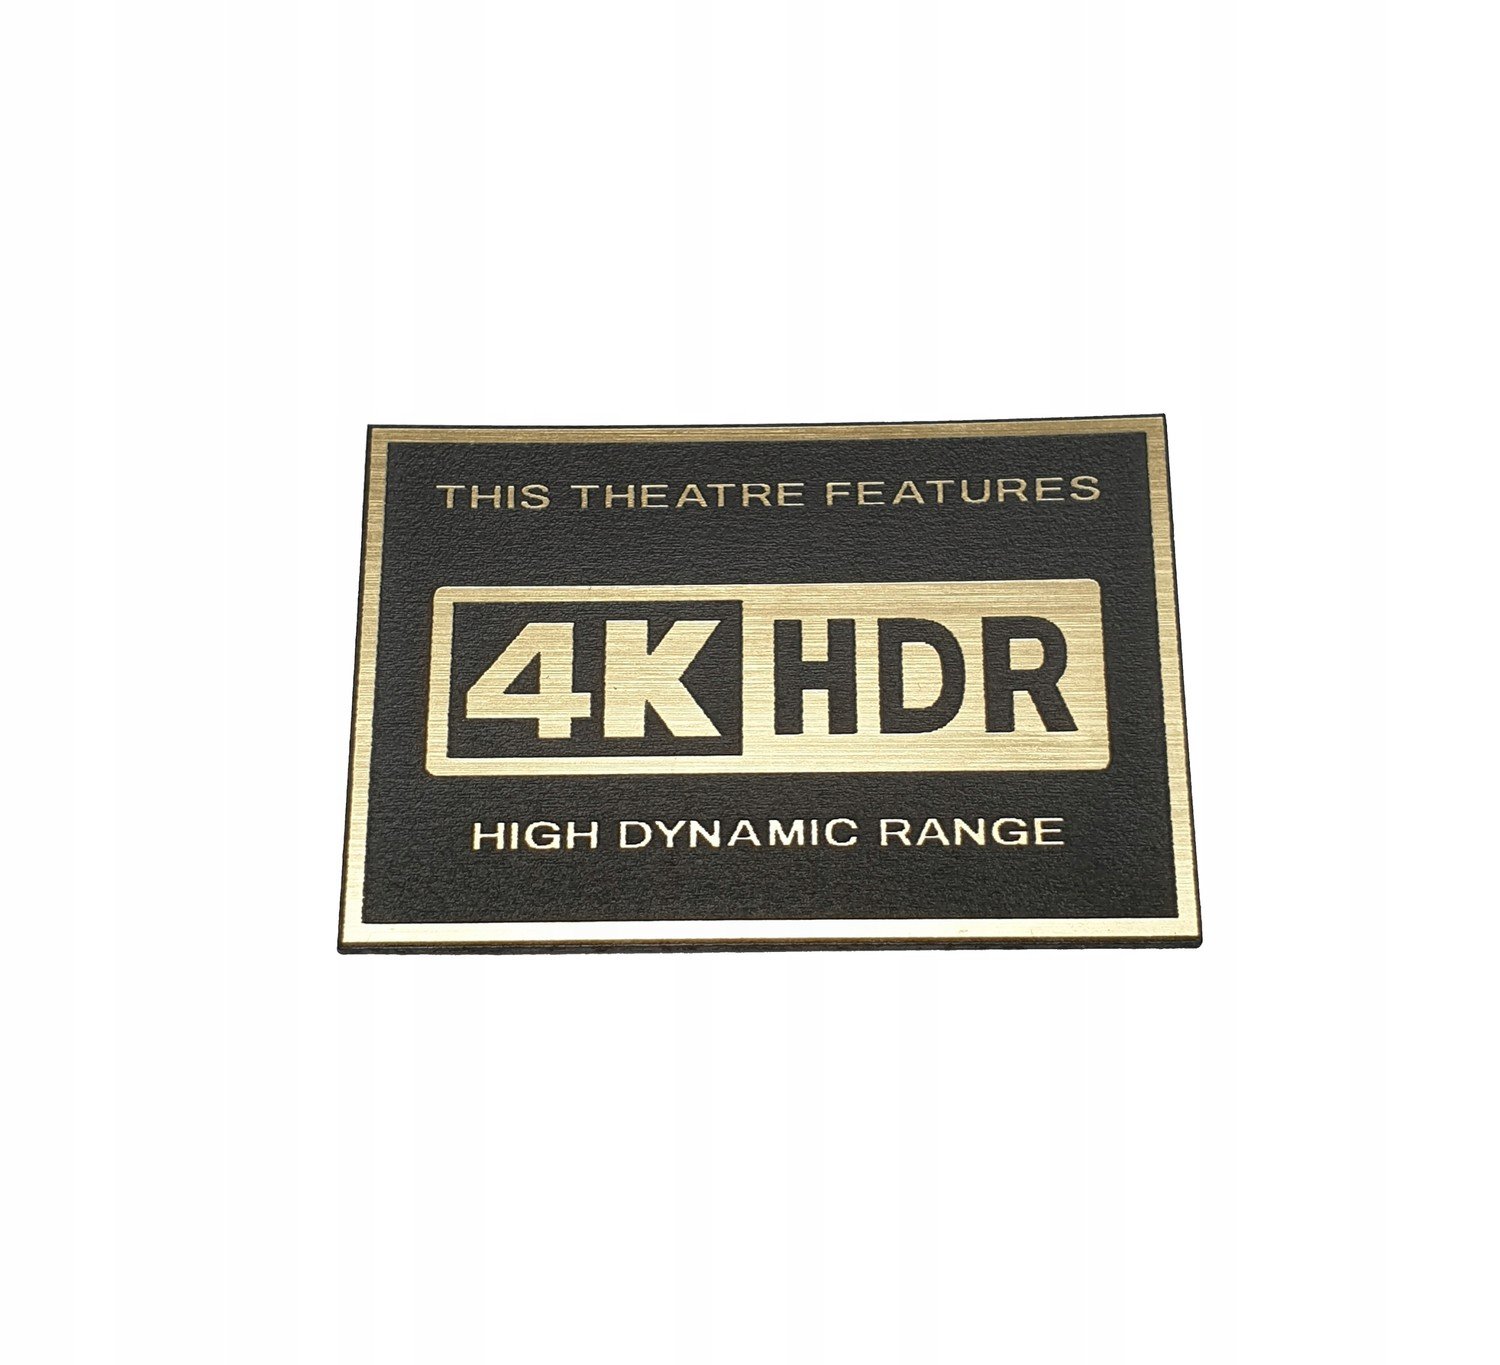 Emblém 4K Hdr Theatre Features zlatý 290x190mm